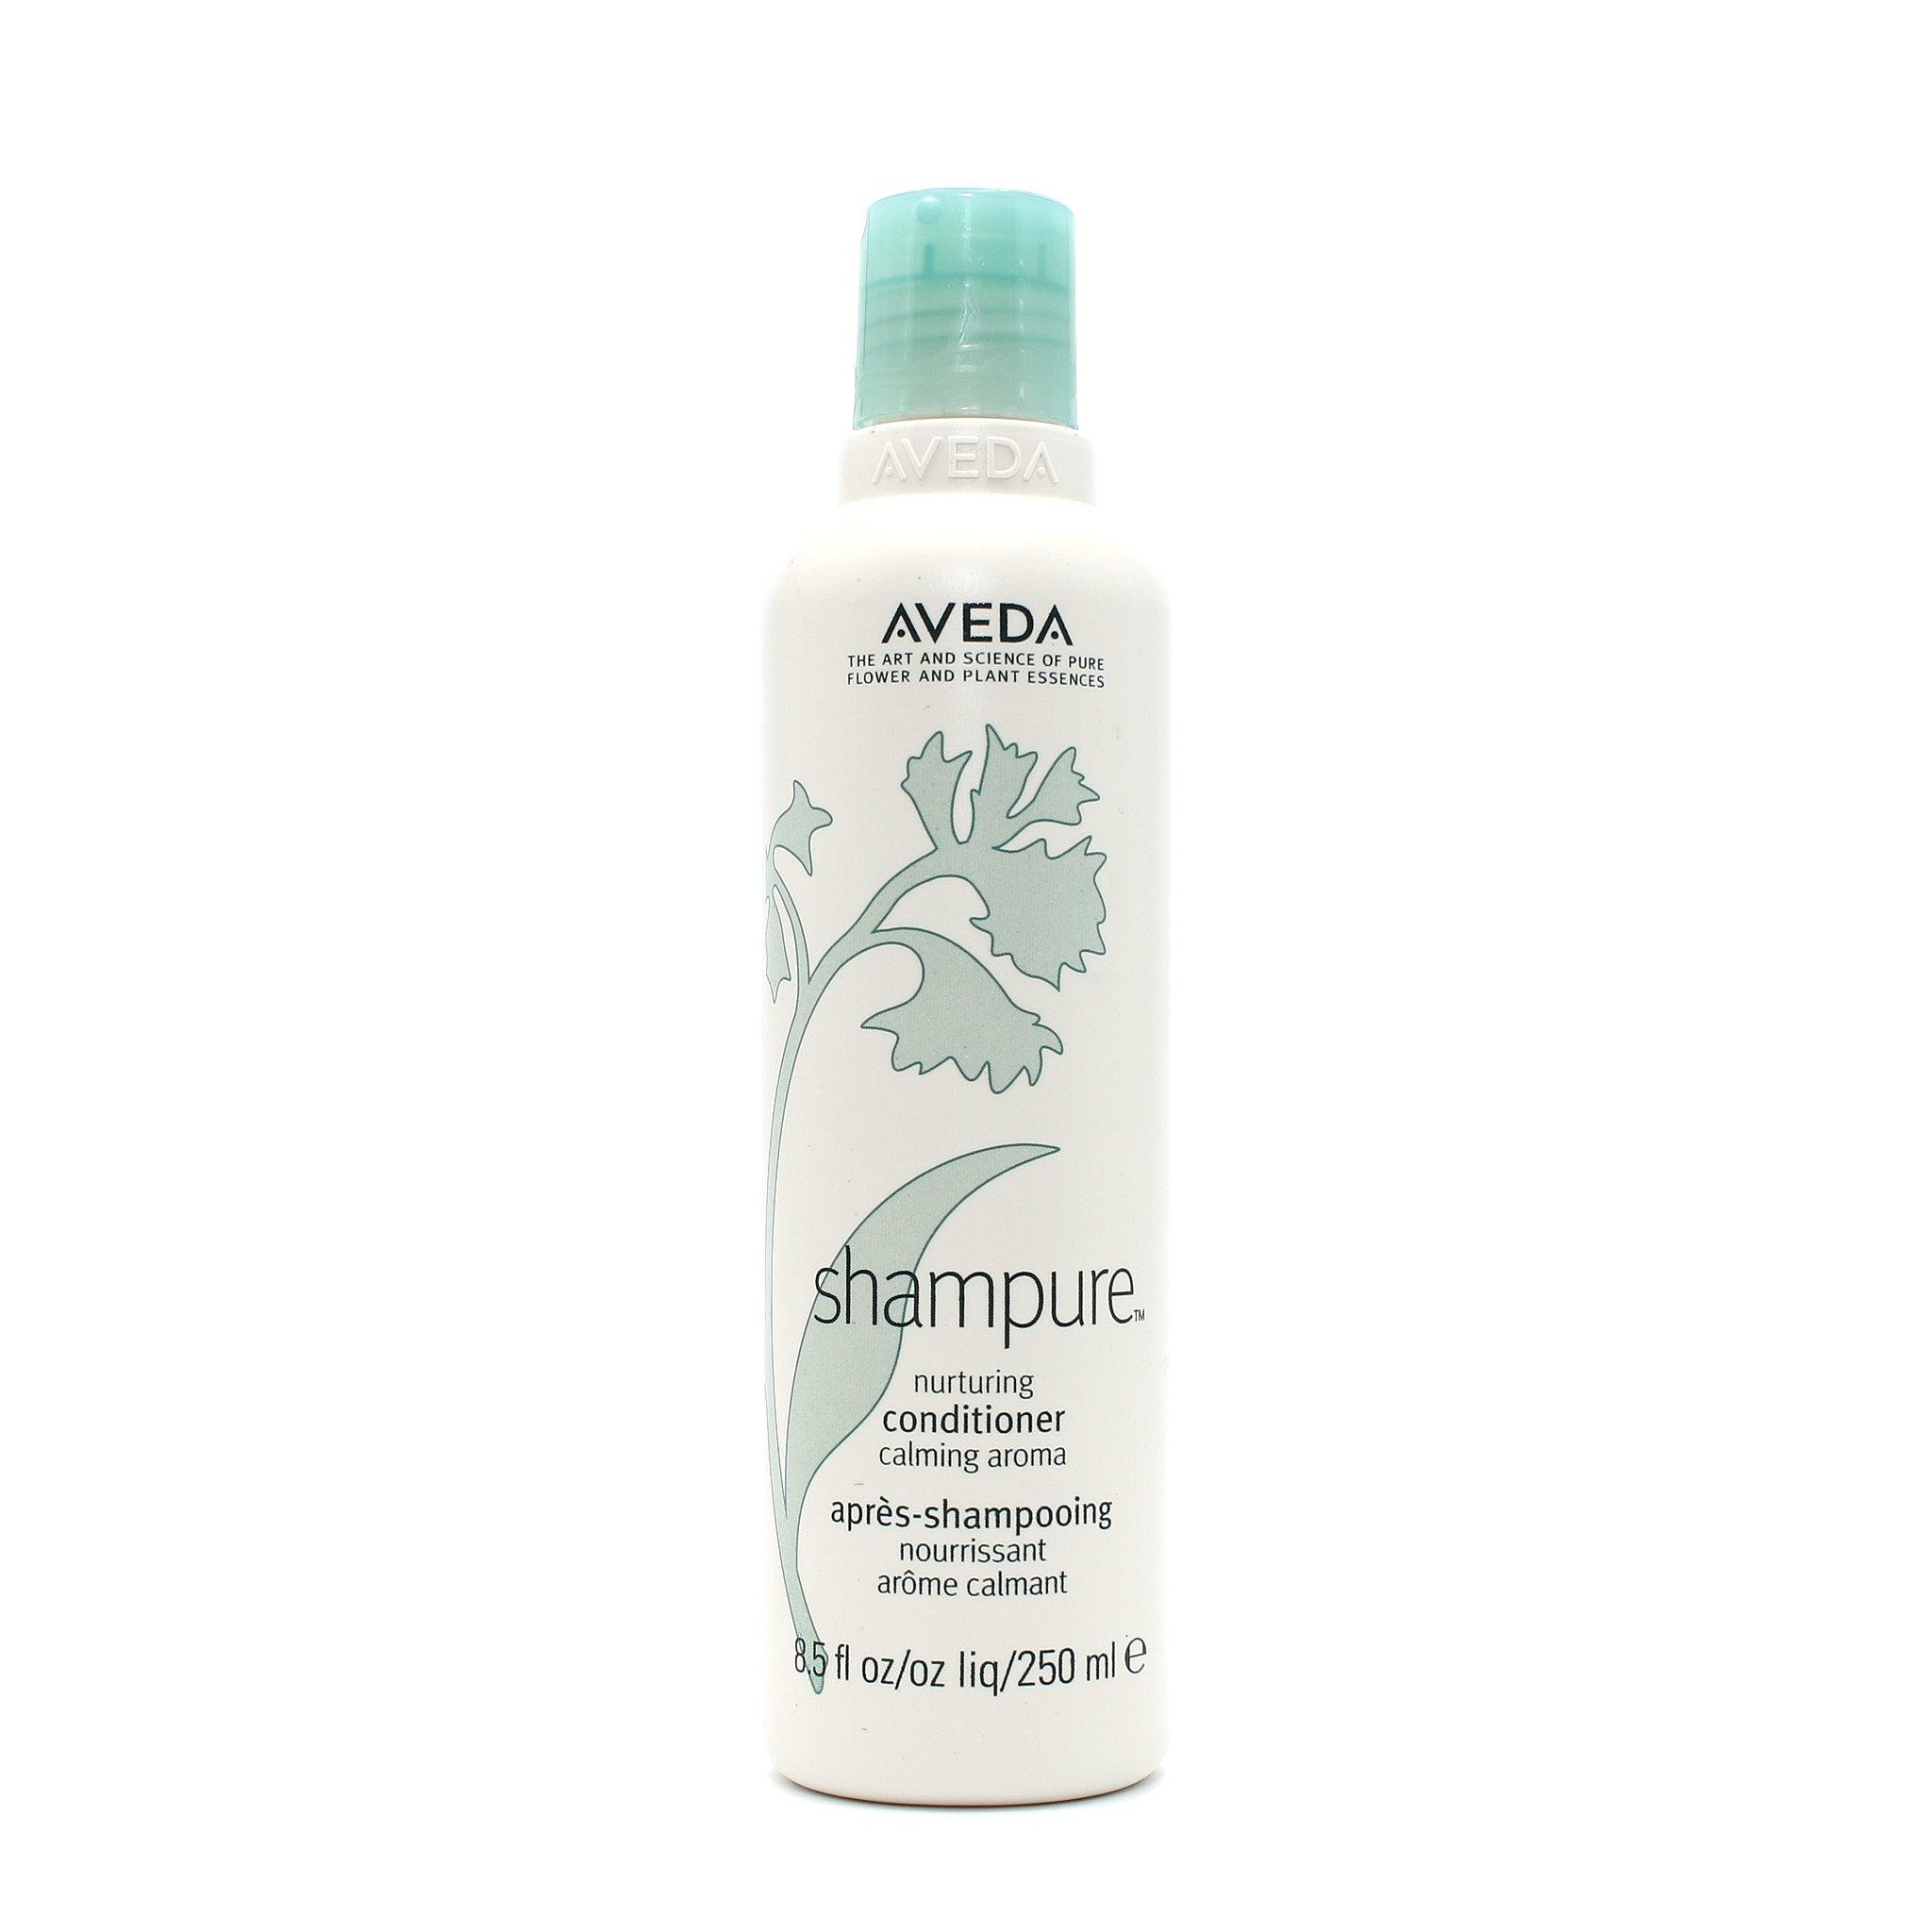 AVEDA Shampure Nurturing Shampoo Calming Aroma 8.5 oz